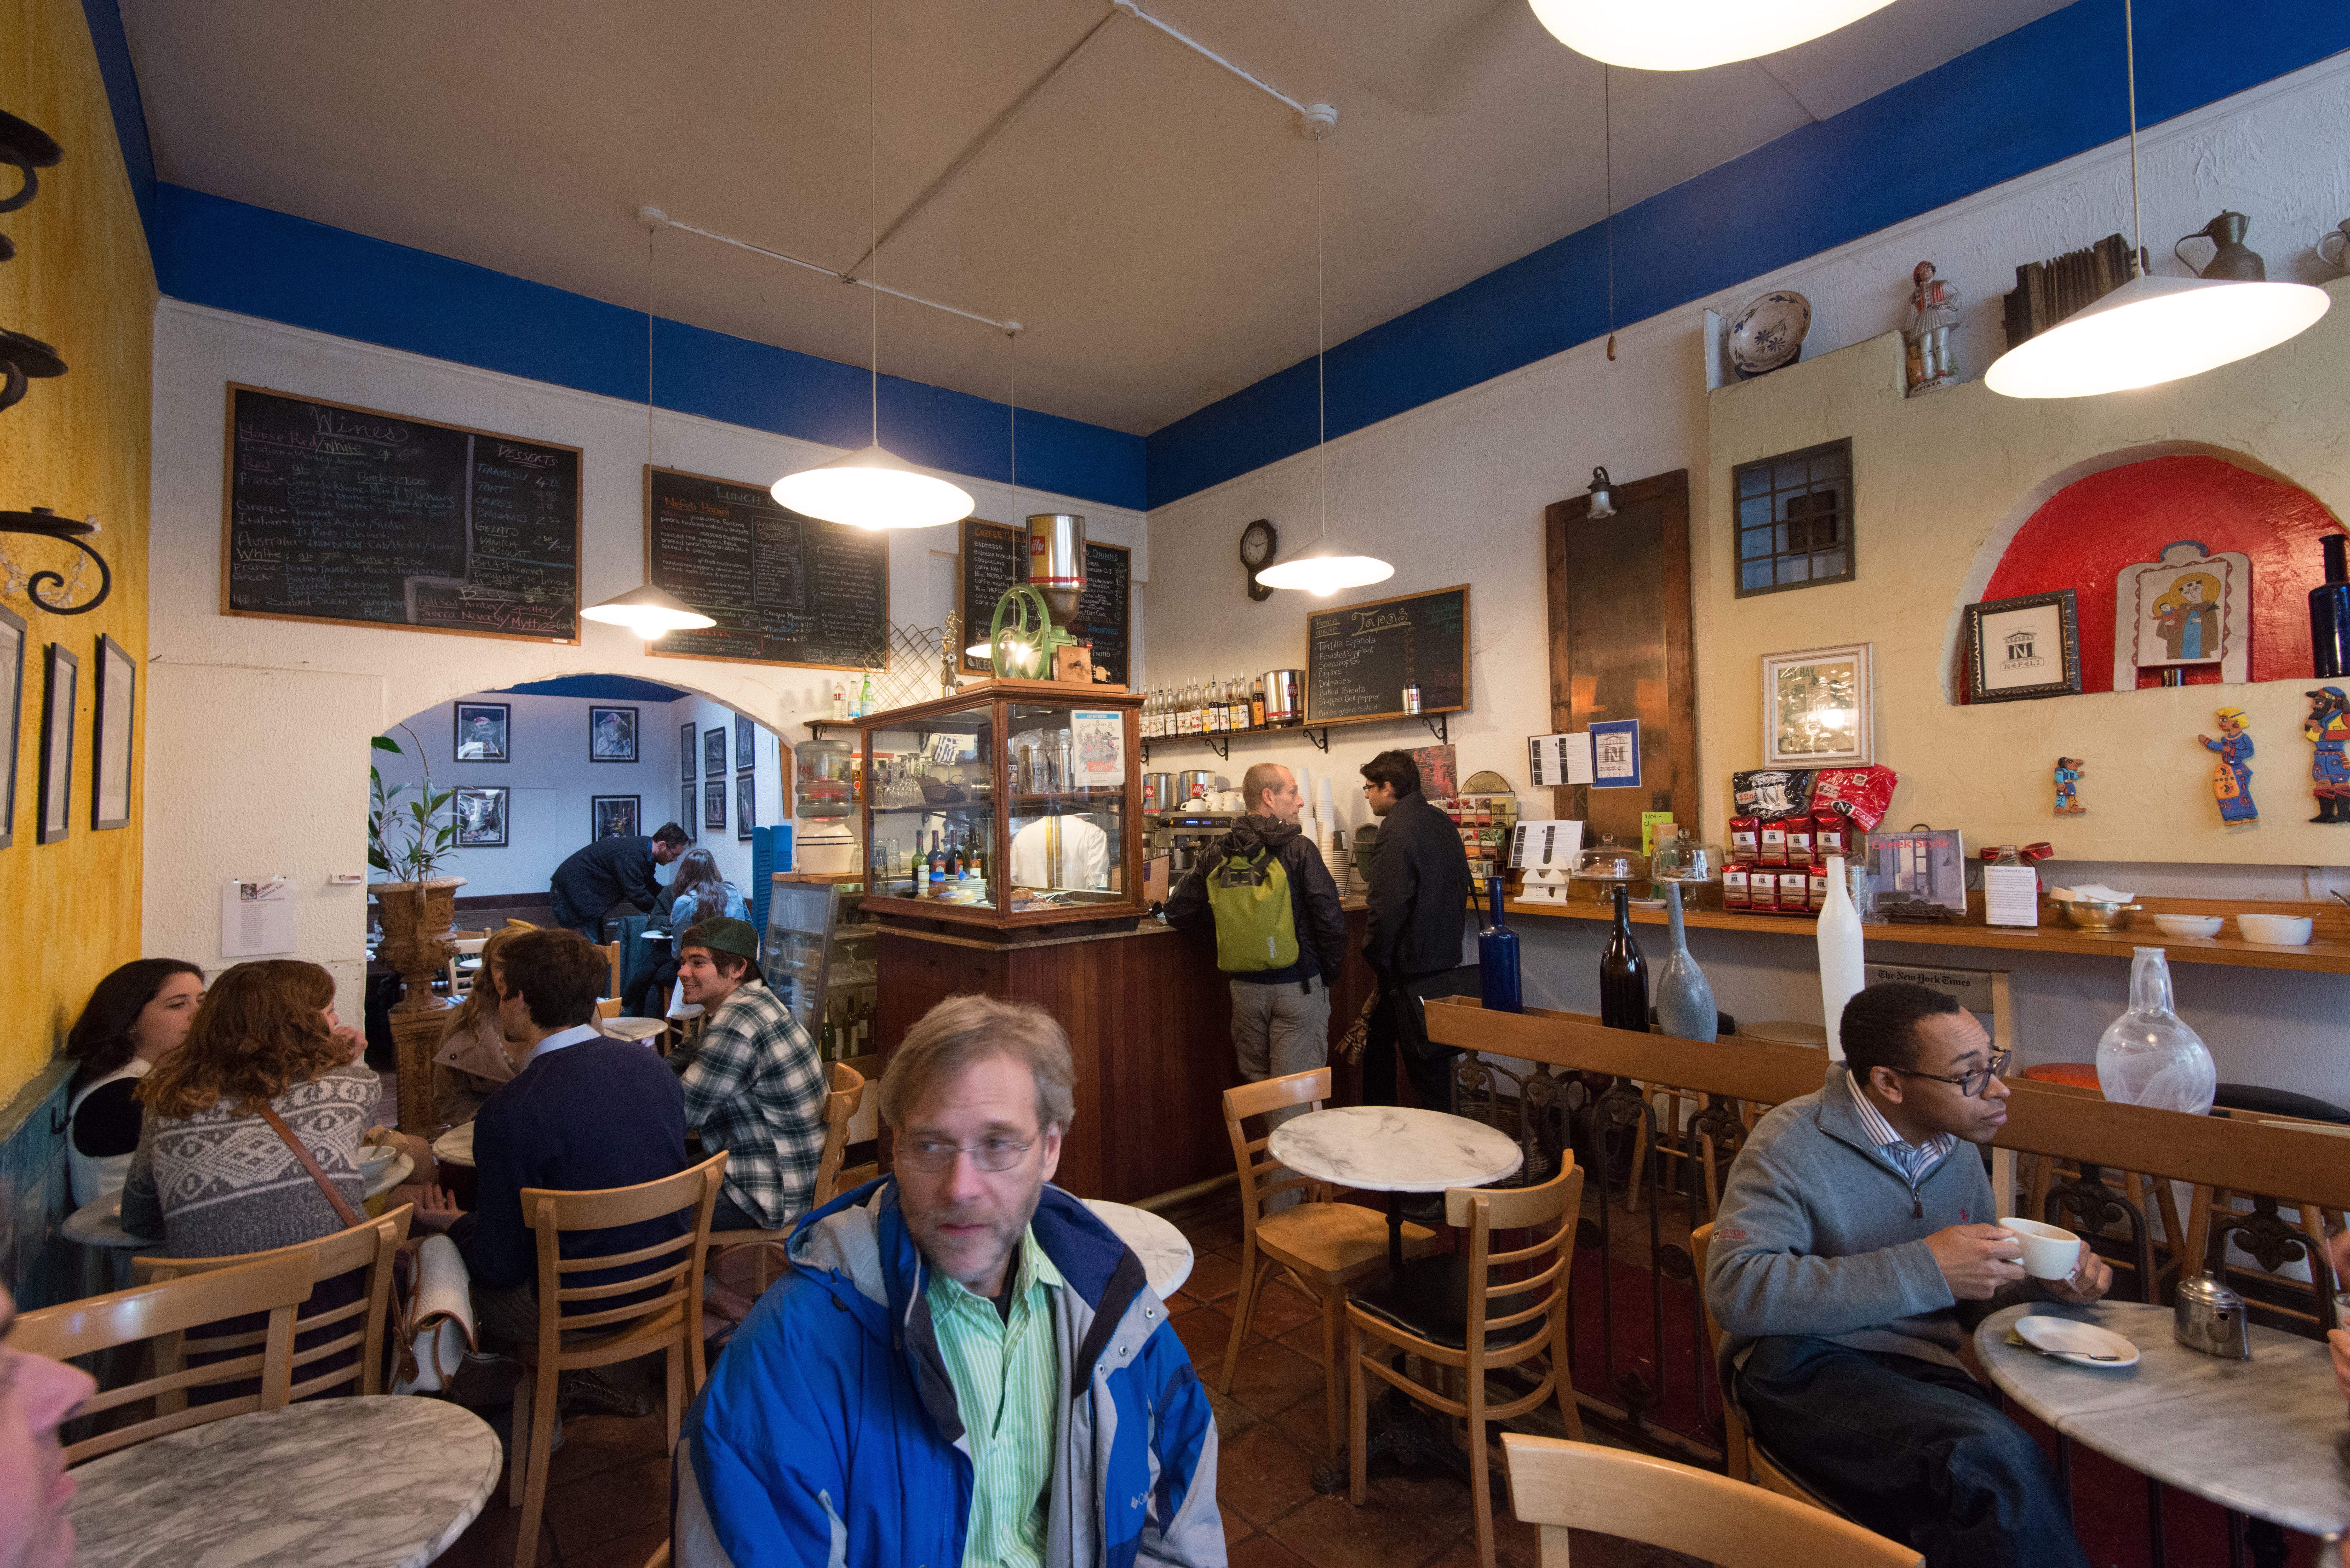 Interior of nefeli cafe on euclid in berkeley photo